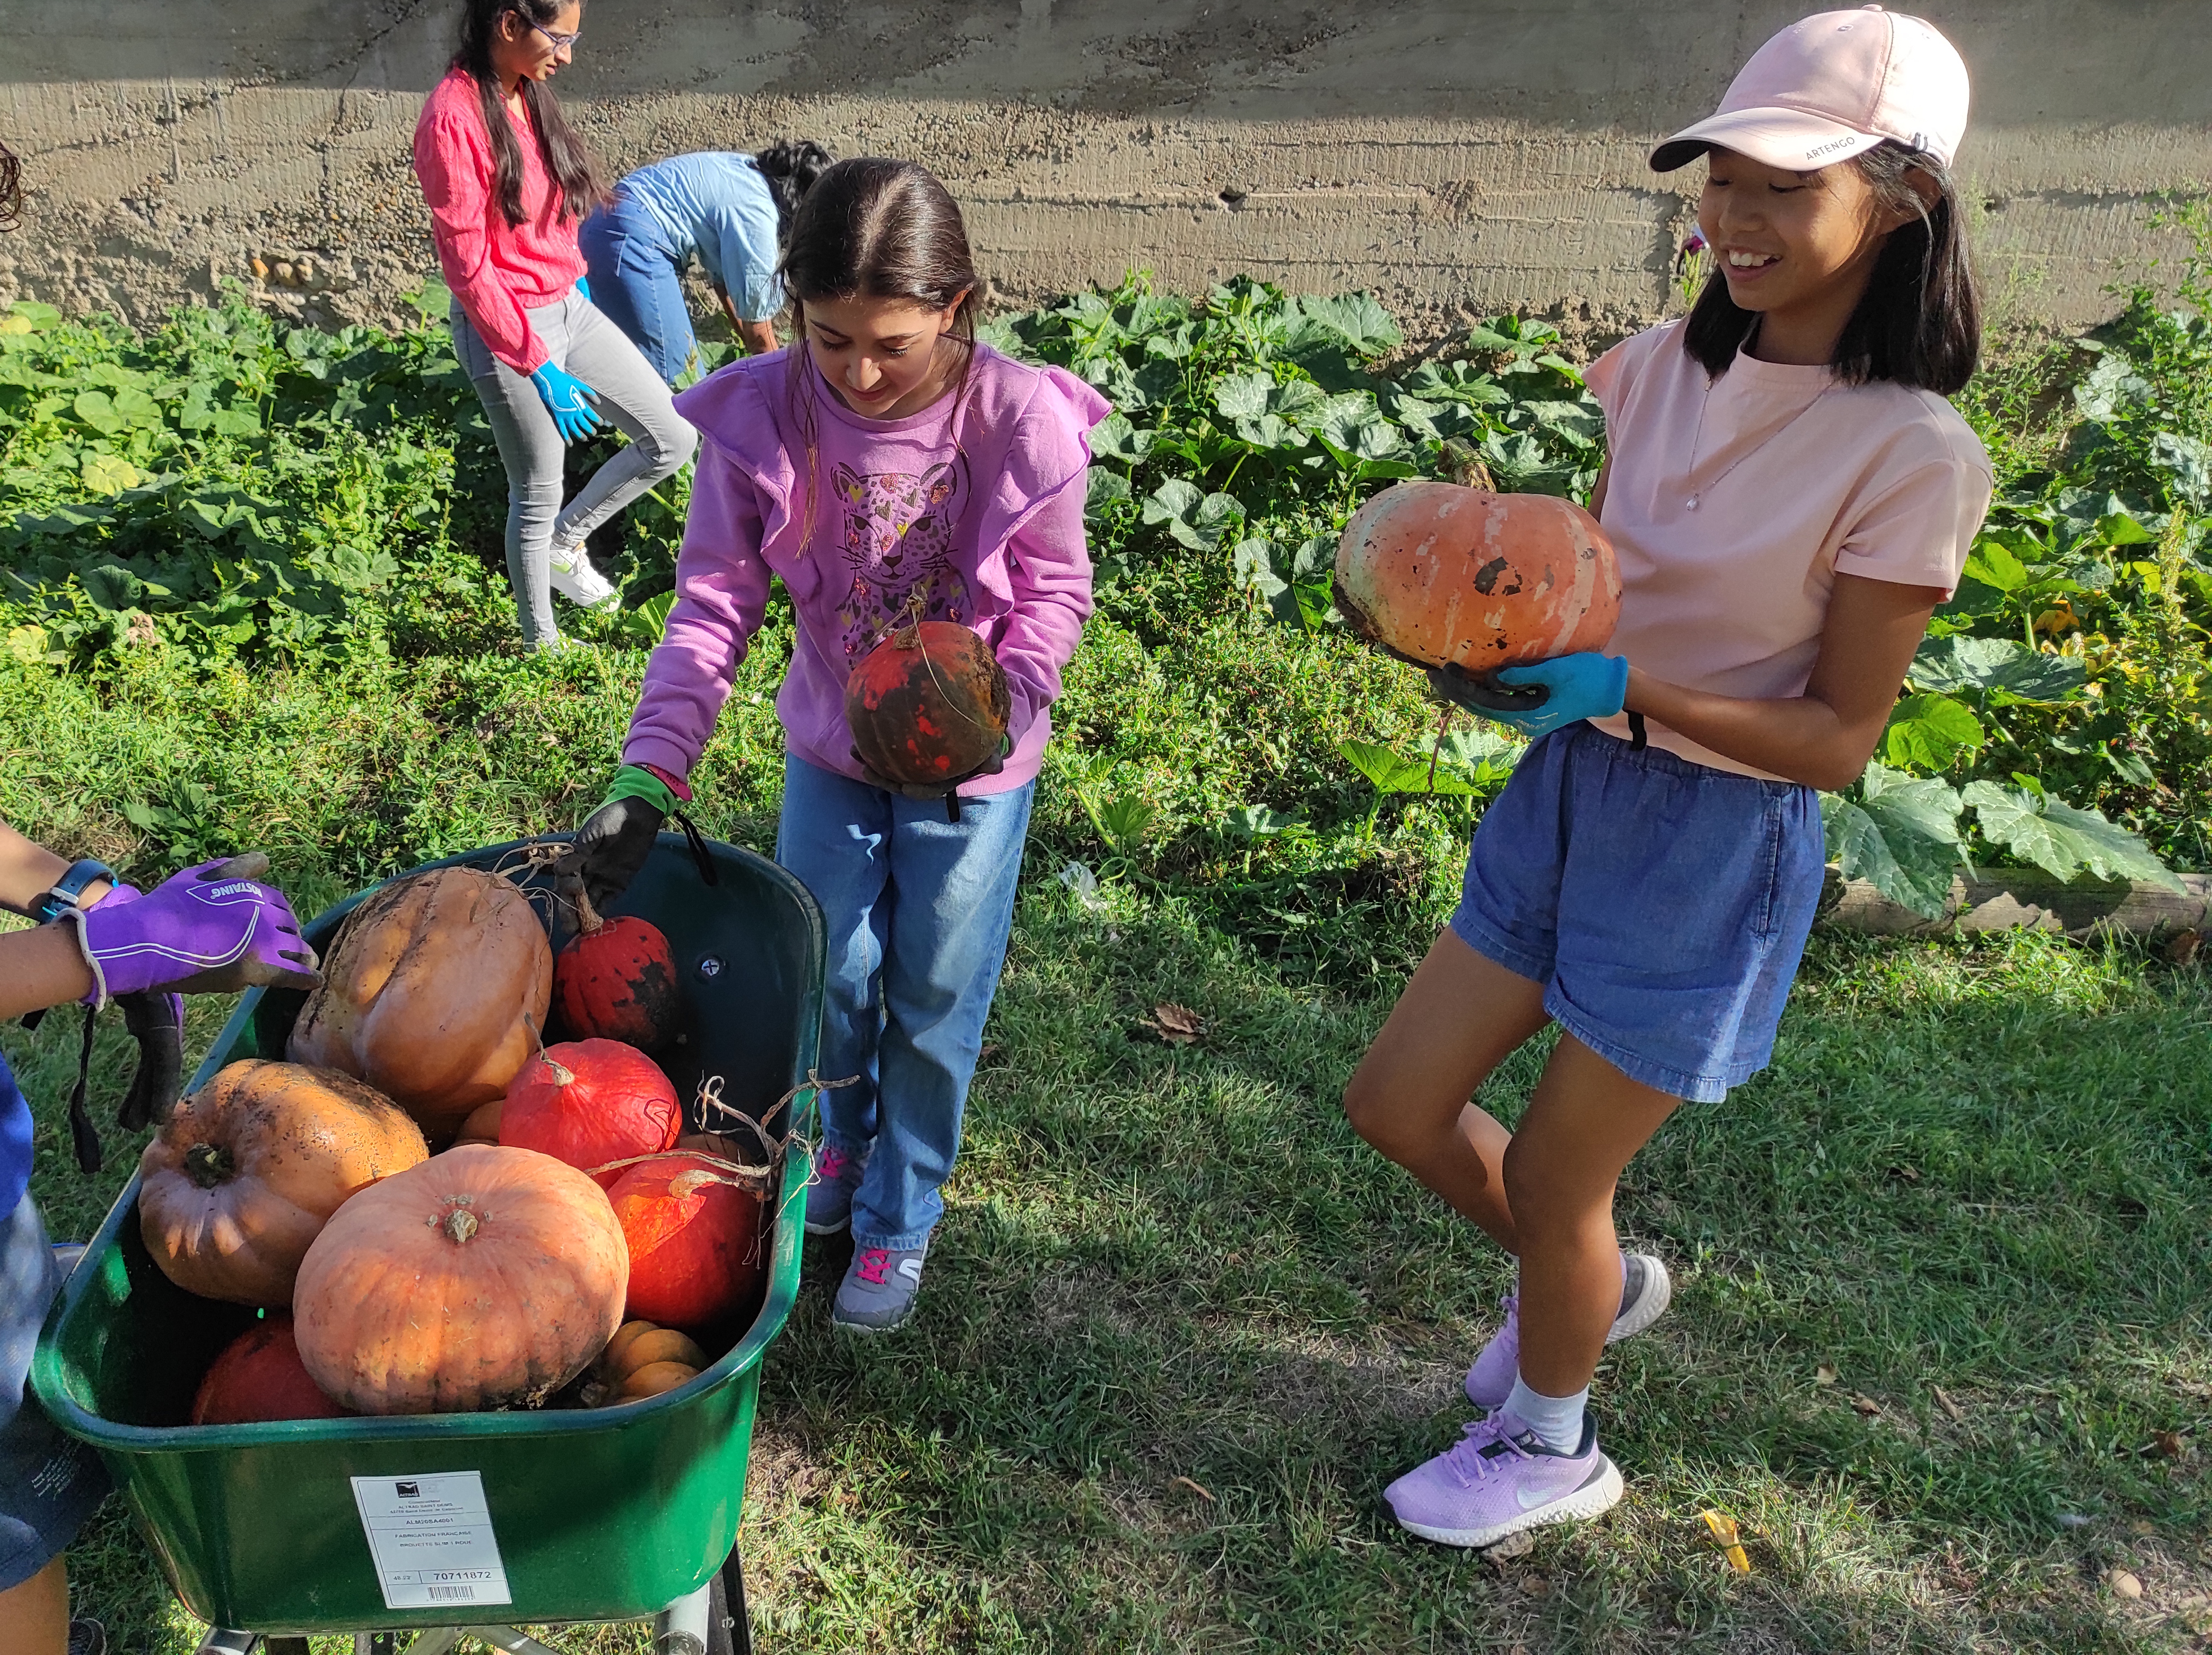 Students putting pumpkins into a wheelbarrow.